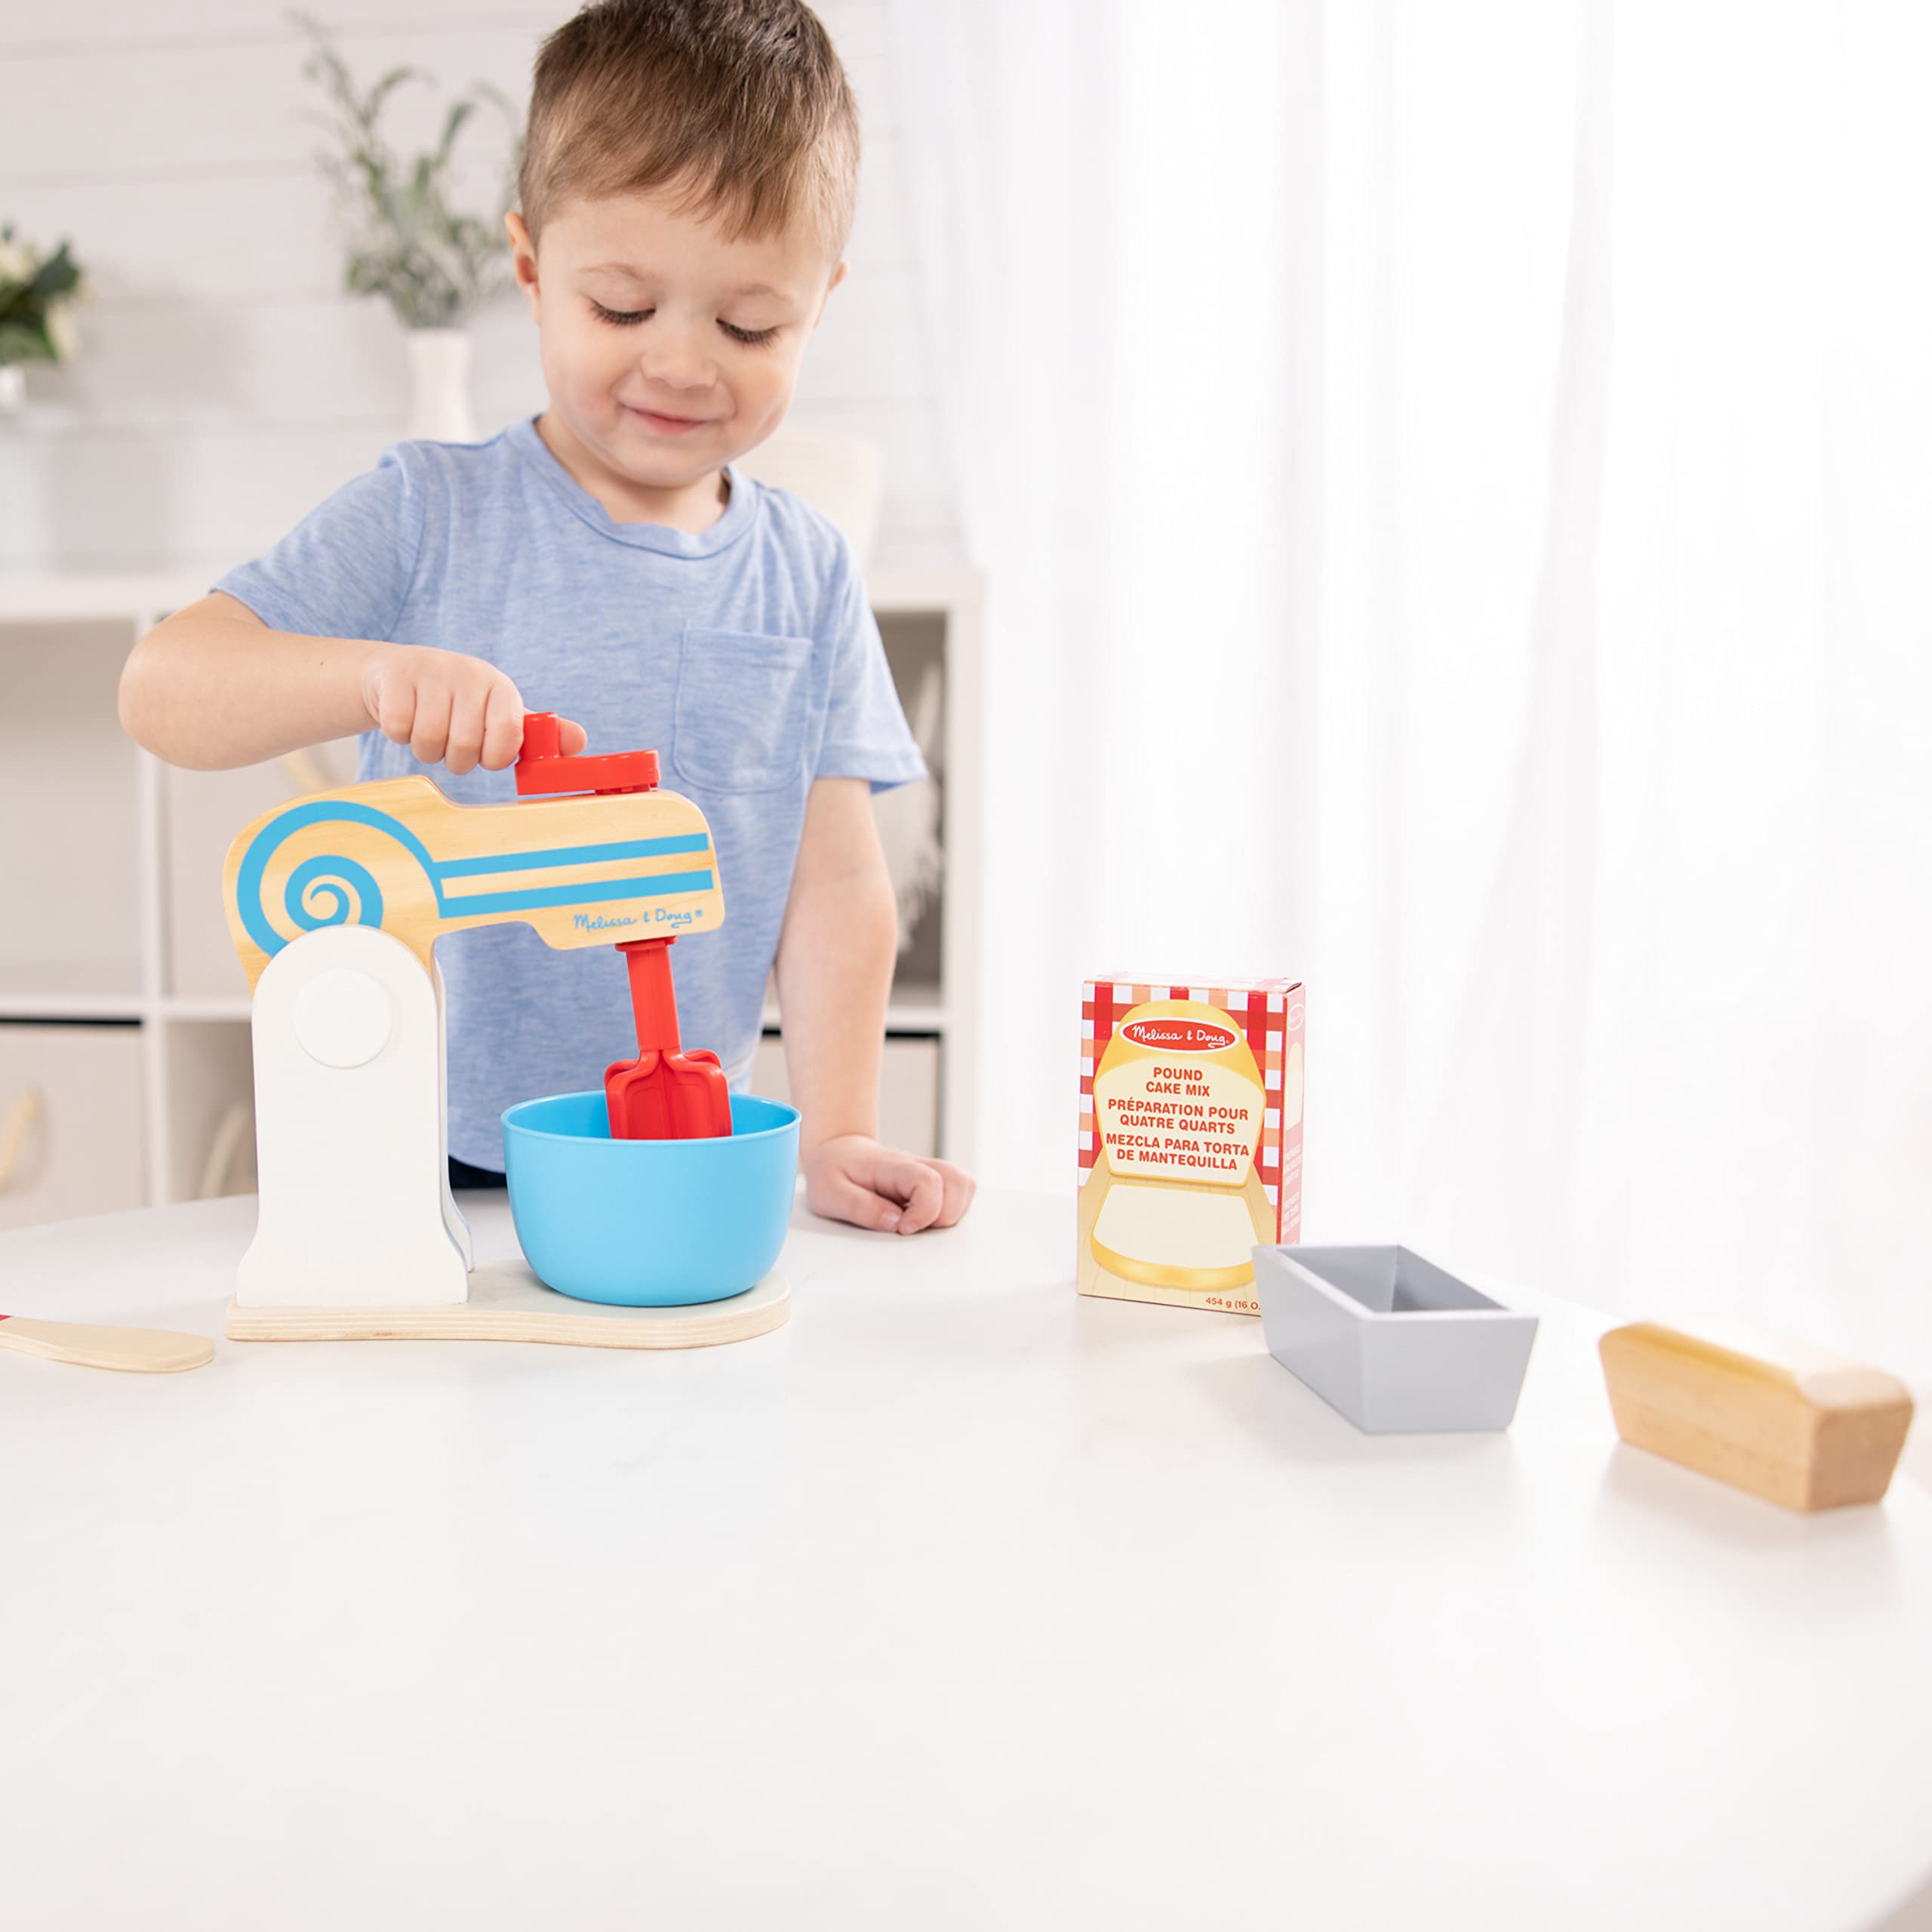 Melissa & Doug Wooden Make-a-Cake Mixer Set (10 pcs) - Play Food and Kitchen Accessories - Kitchen Playset Accessories, Pretend Play Kitchen Toys For Kids Ages 3+